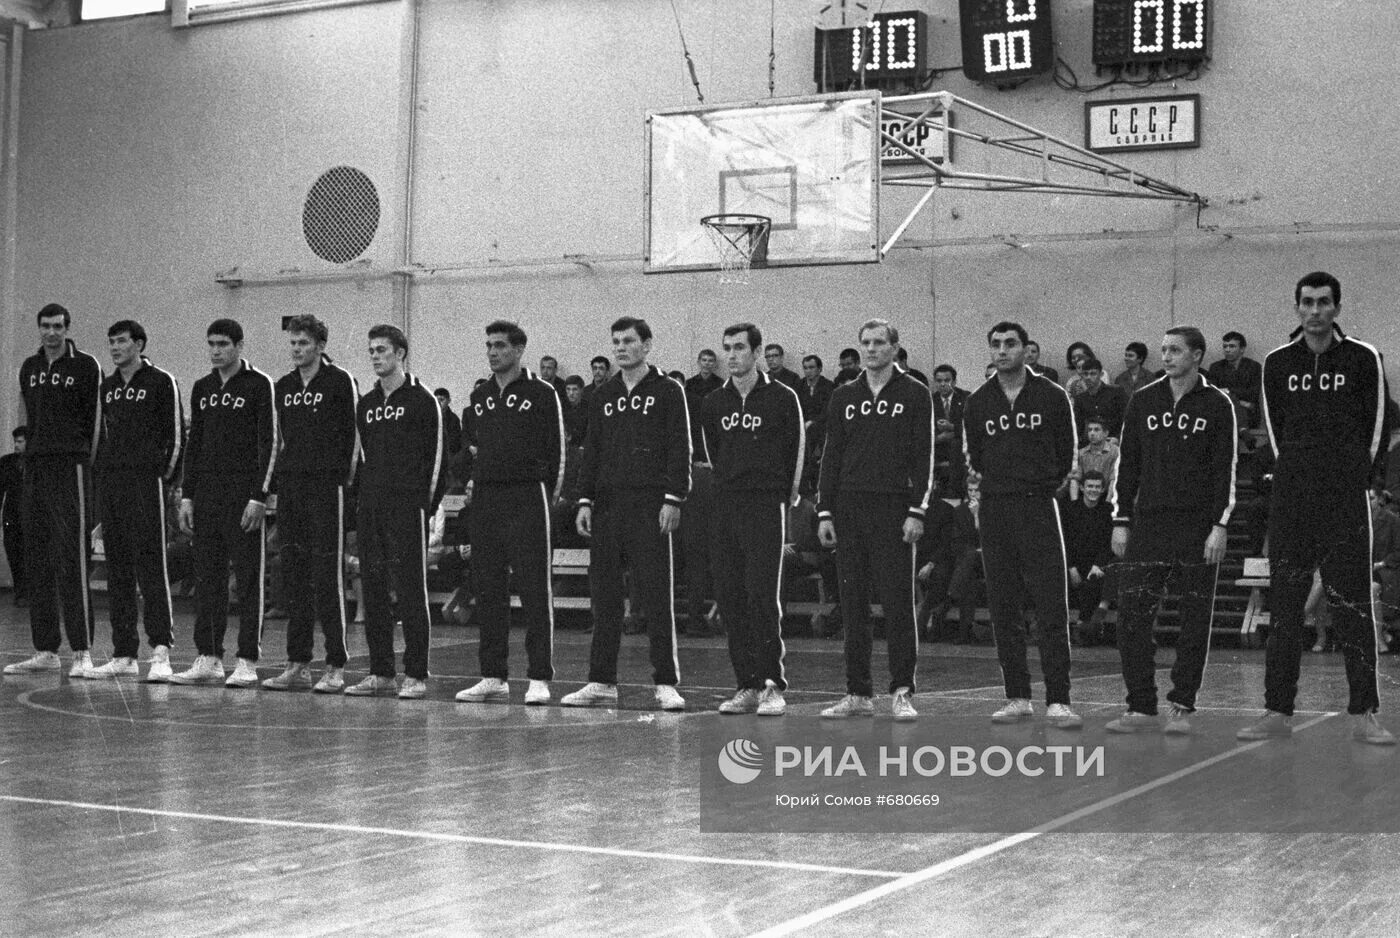 Сборная ссср по баскетболу состав. Баскетбол Мюнхен 1972 сборная СССР. Команда сборной СССР по баскетболу 1972.